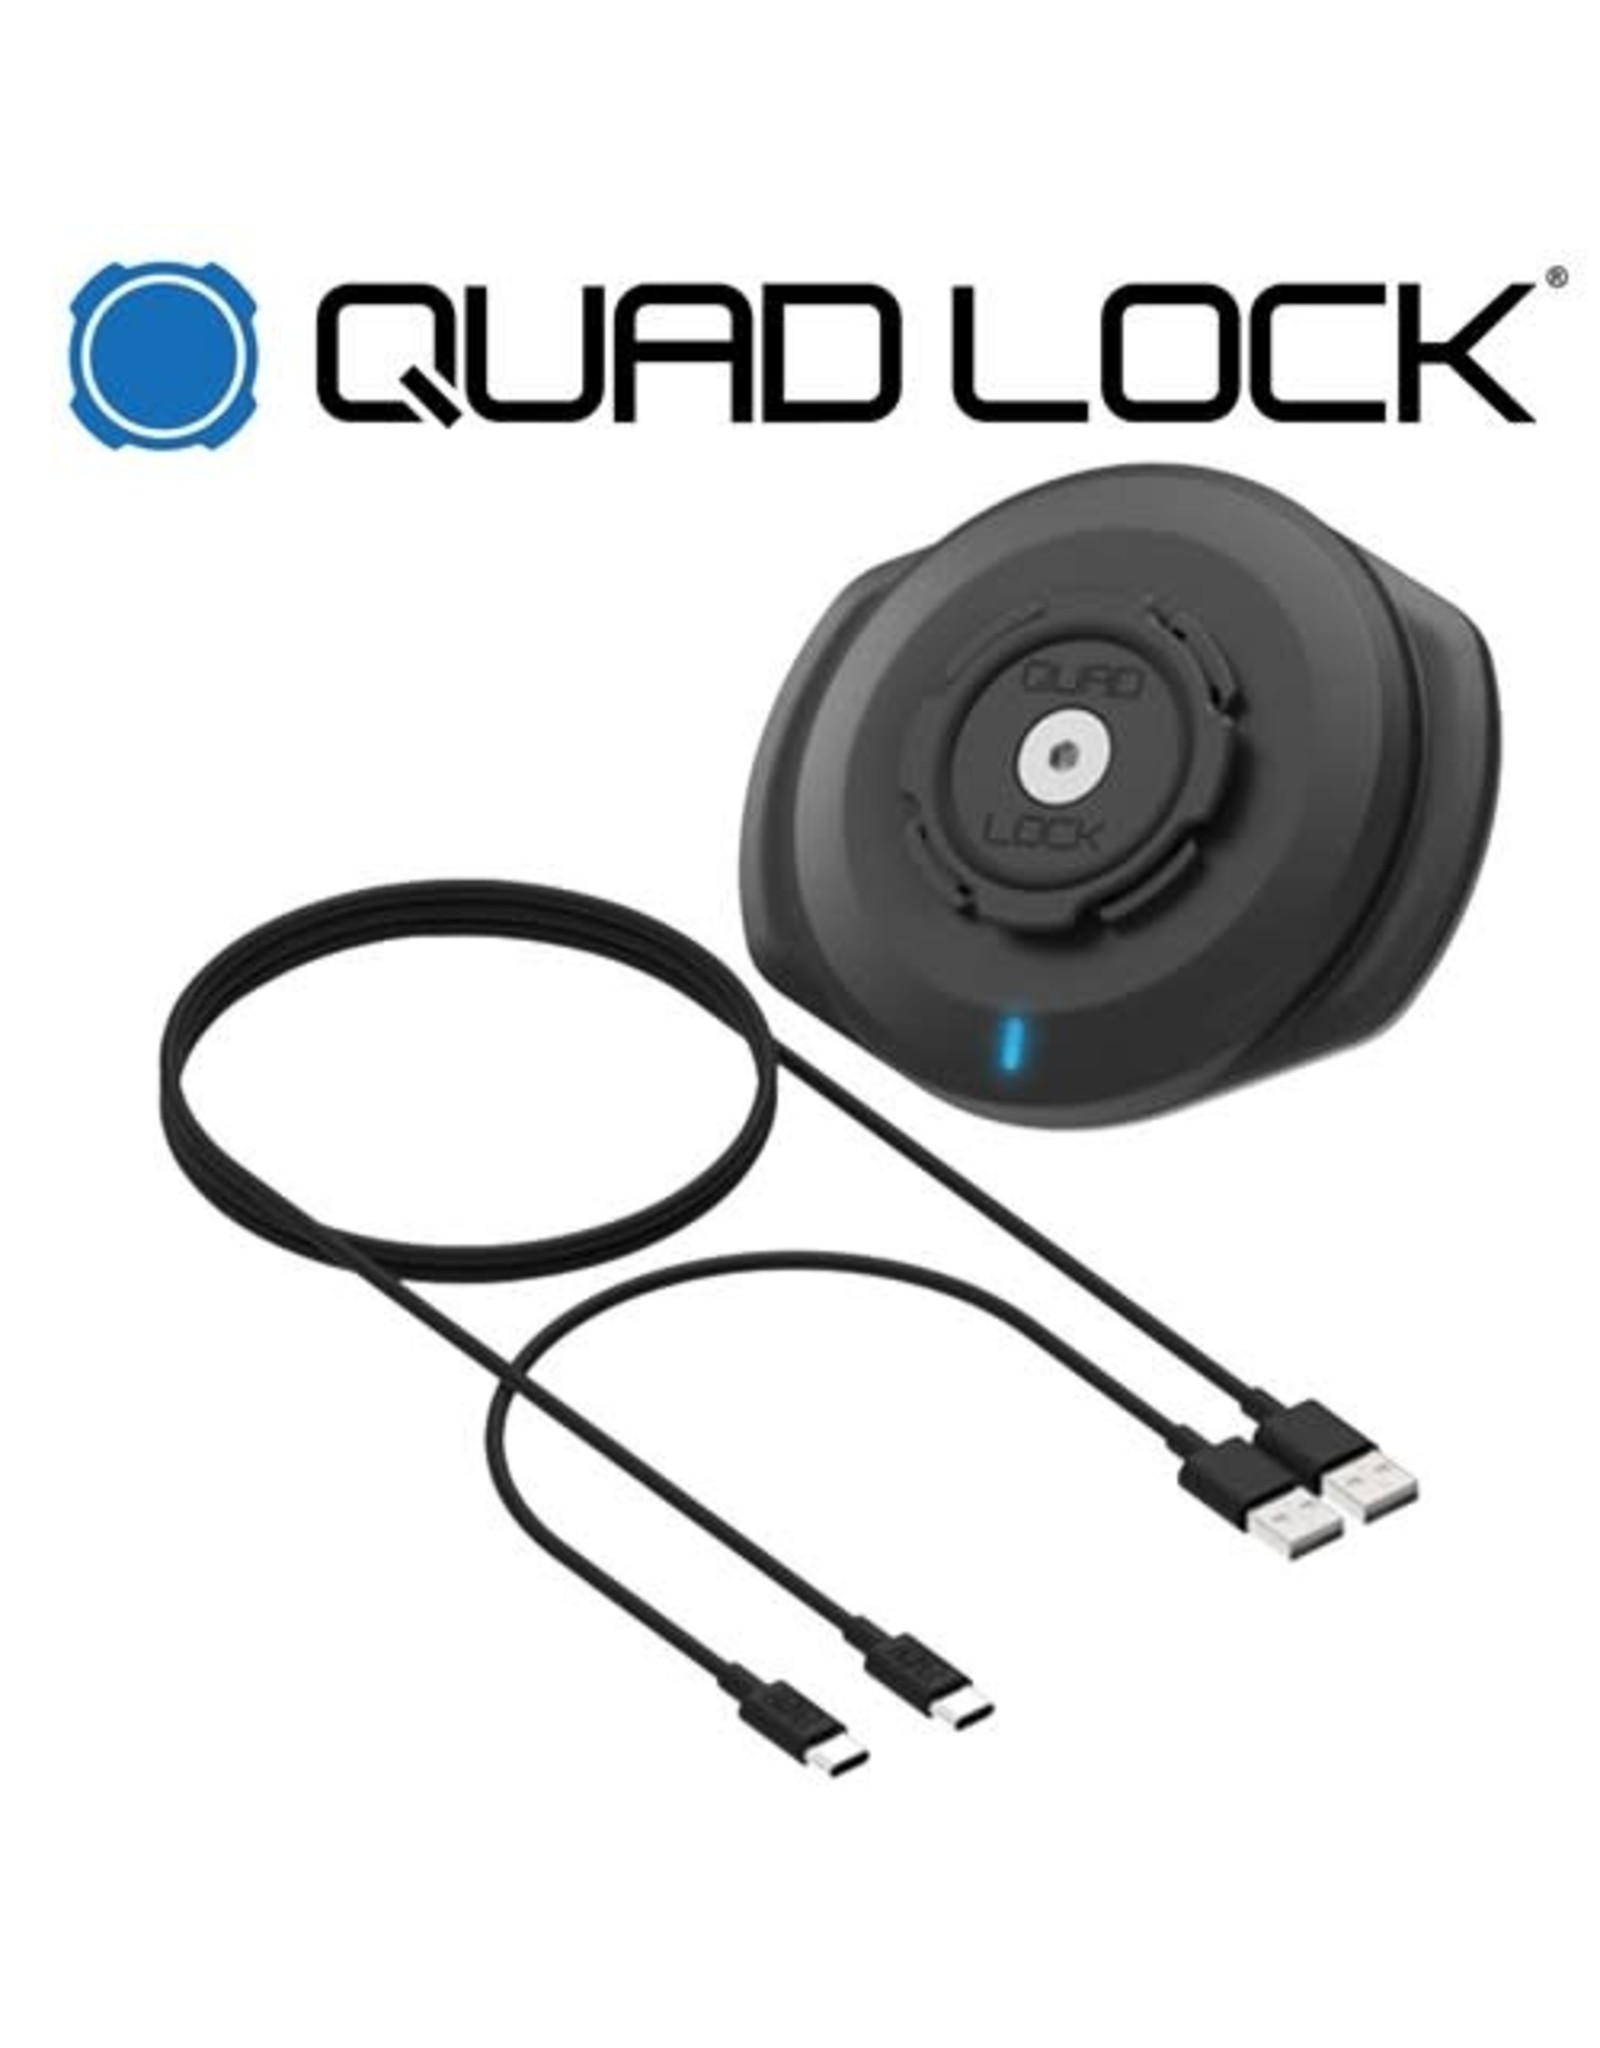 Quad Lock Weatherproof Wireless Charging Head (USB connection)